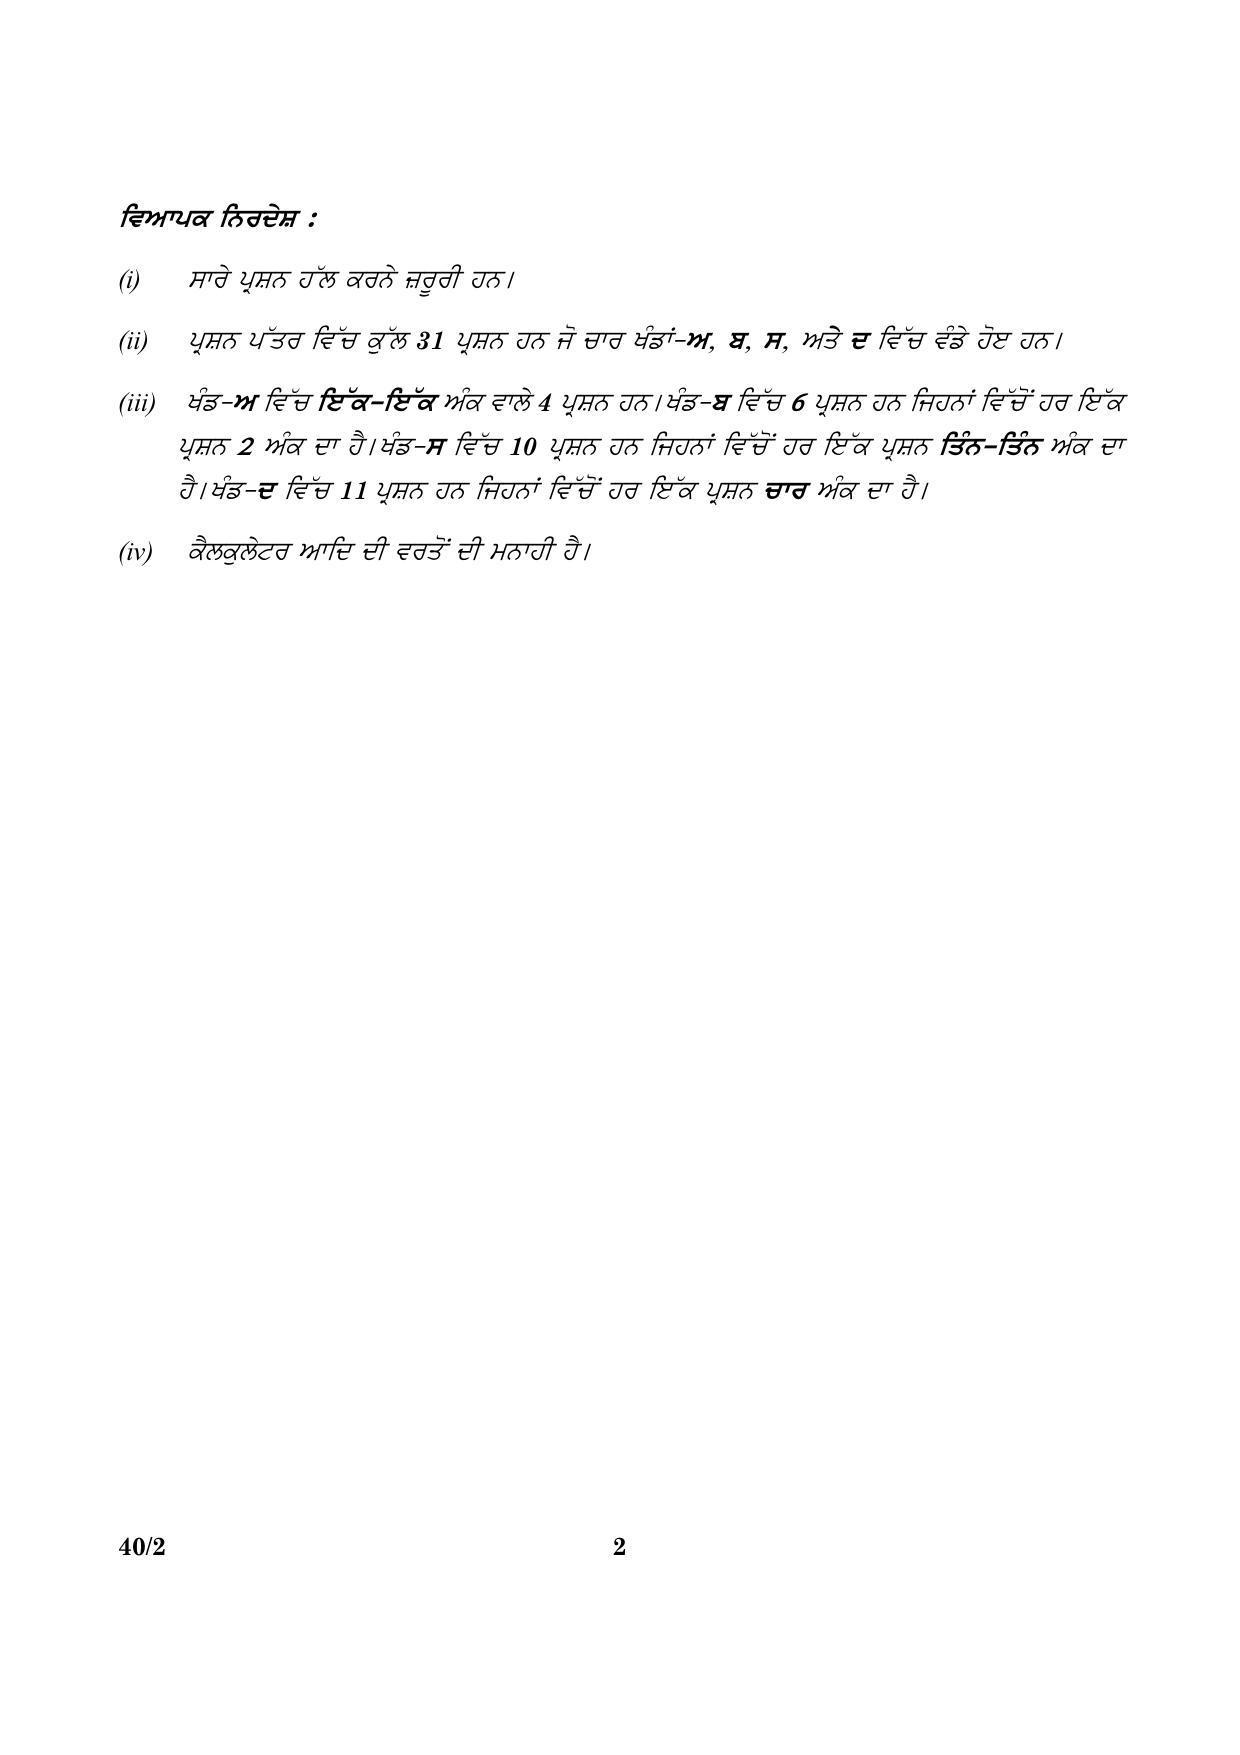 CBSE Class 10 040 Mathematics Punjabi 2 2016 Question Paper - Page 2